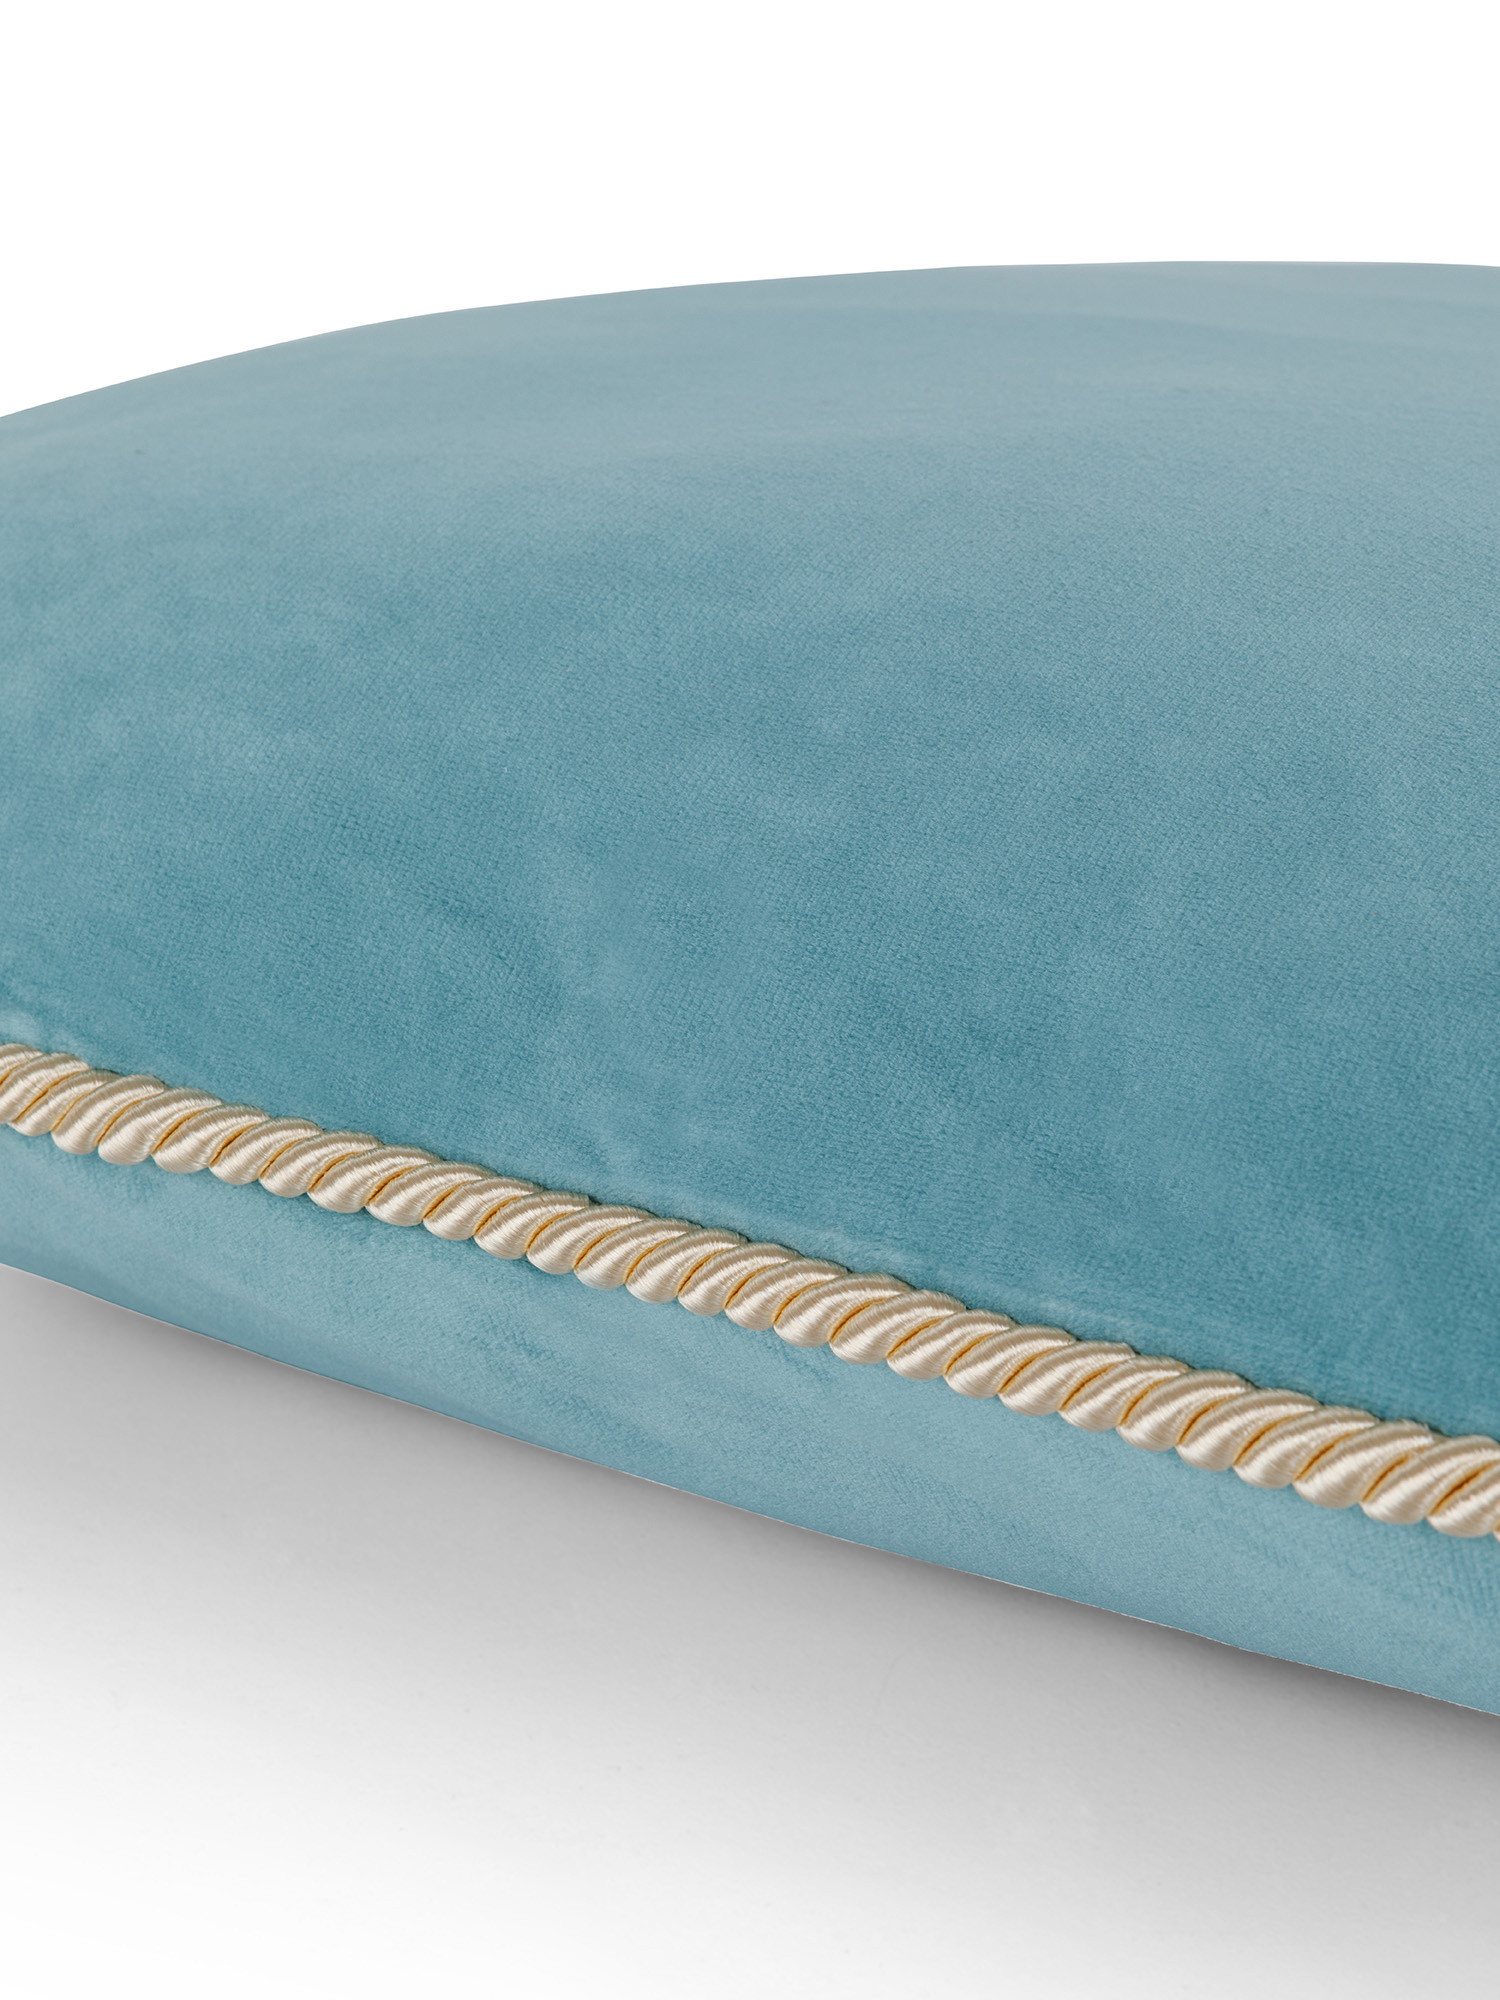 Velvet cushion 45x45cm, Blue Celeste, large image number 2